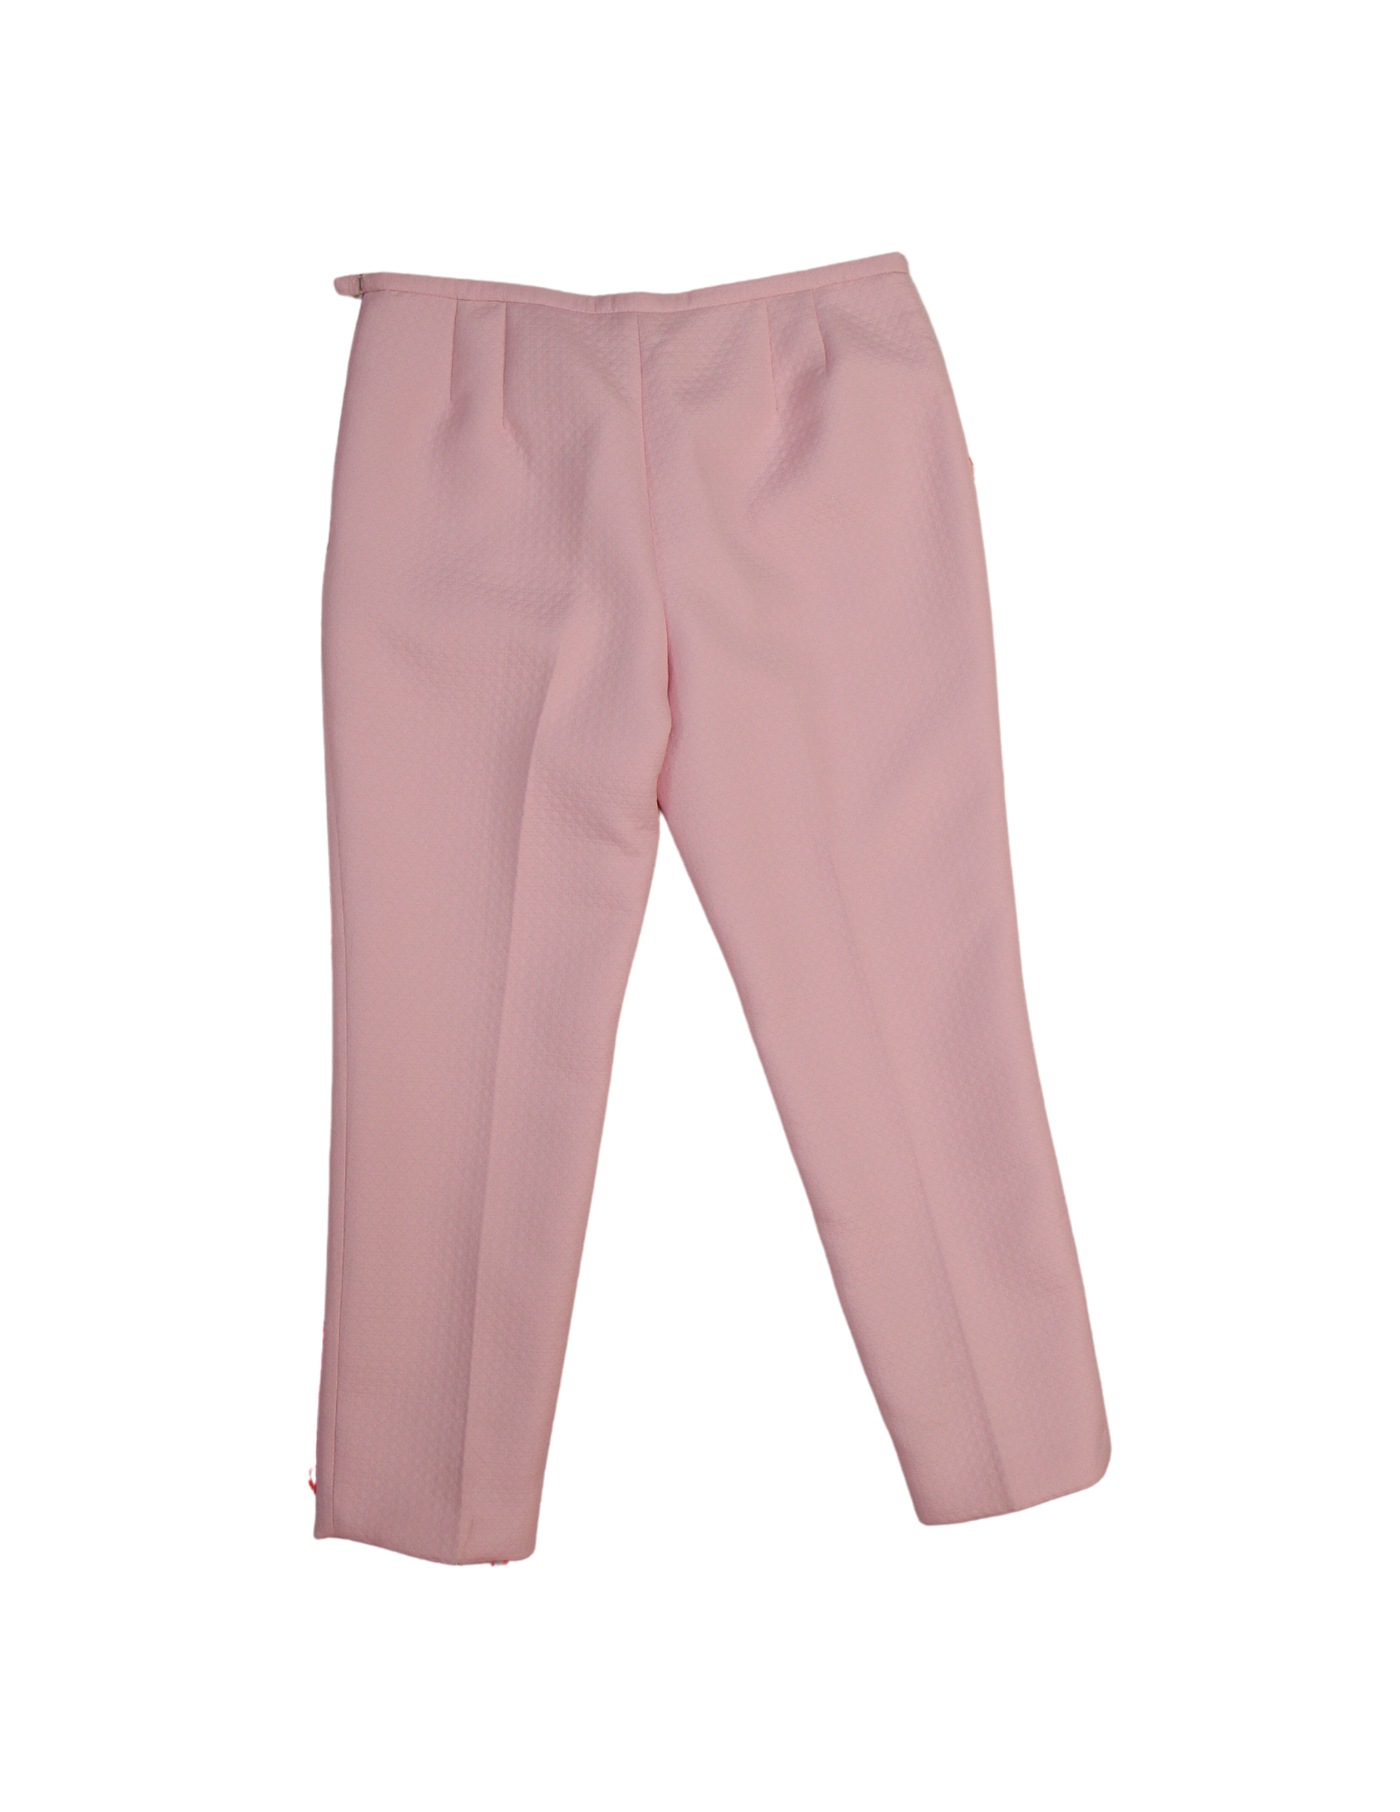 Pink Fringe Party Pants Size10/12